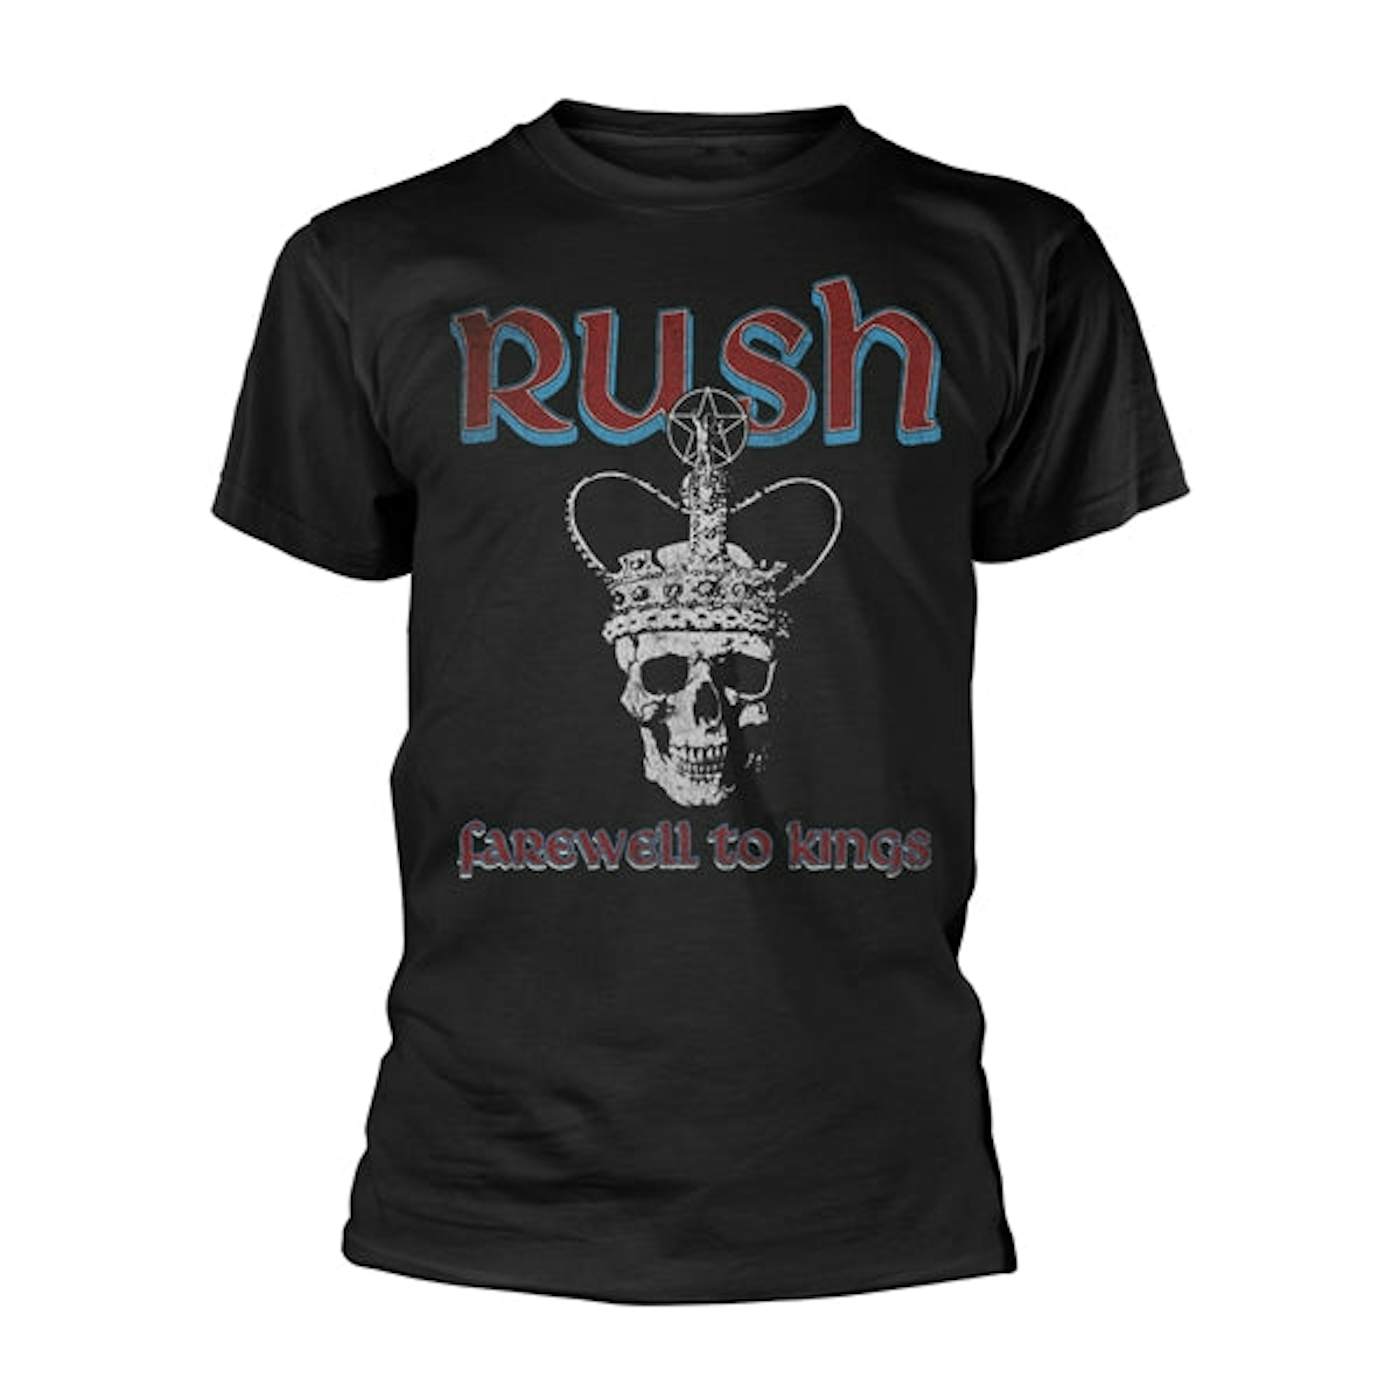 Rush T Shirt - Farewell To Kings